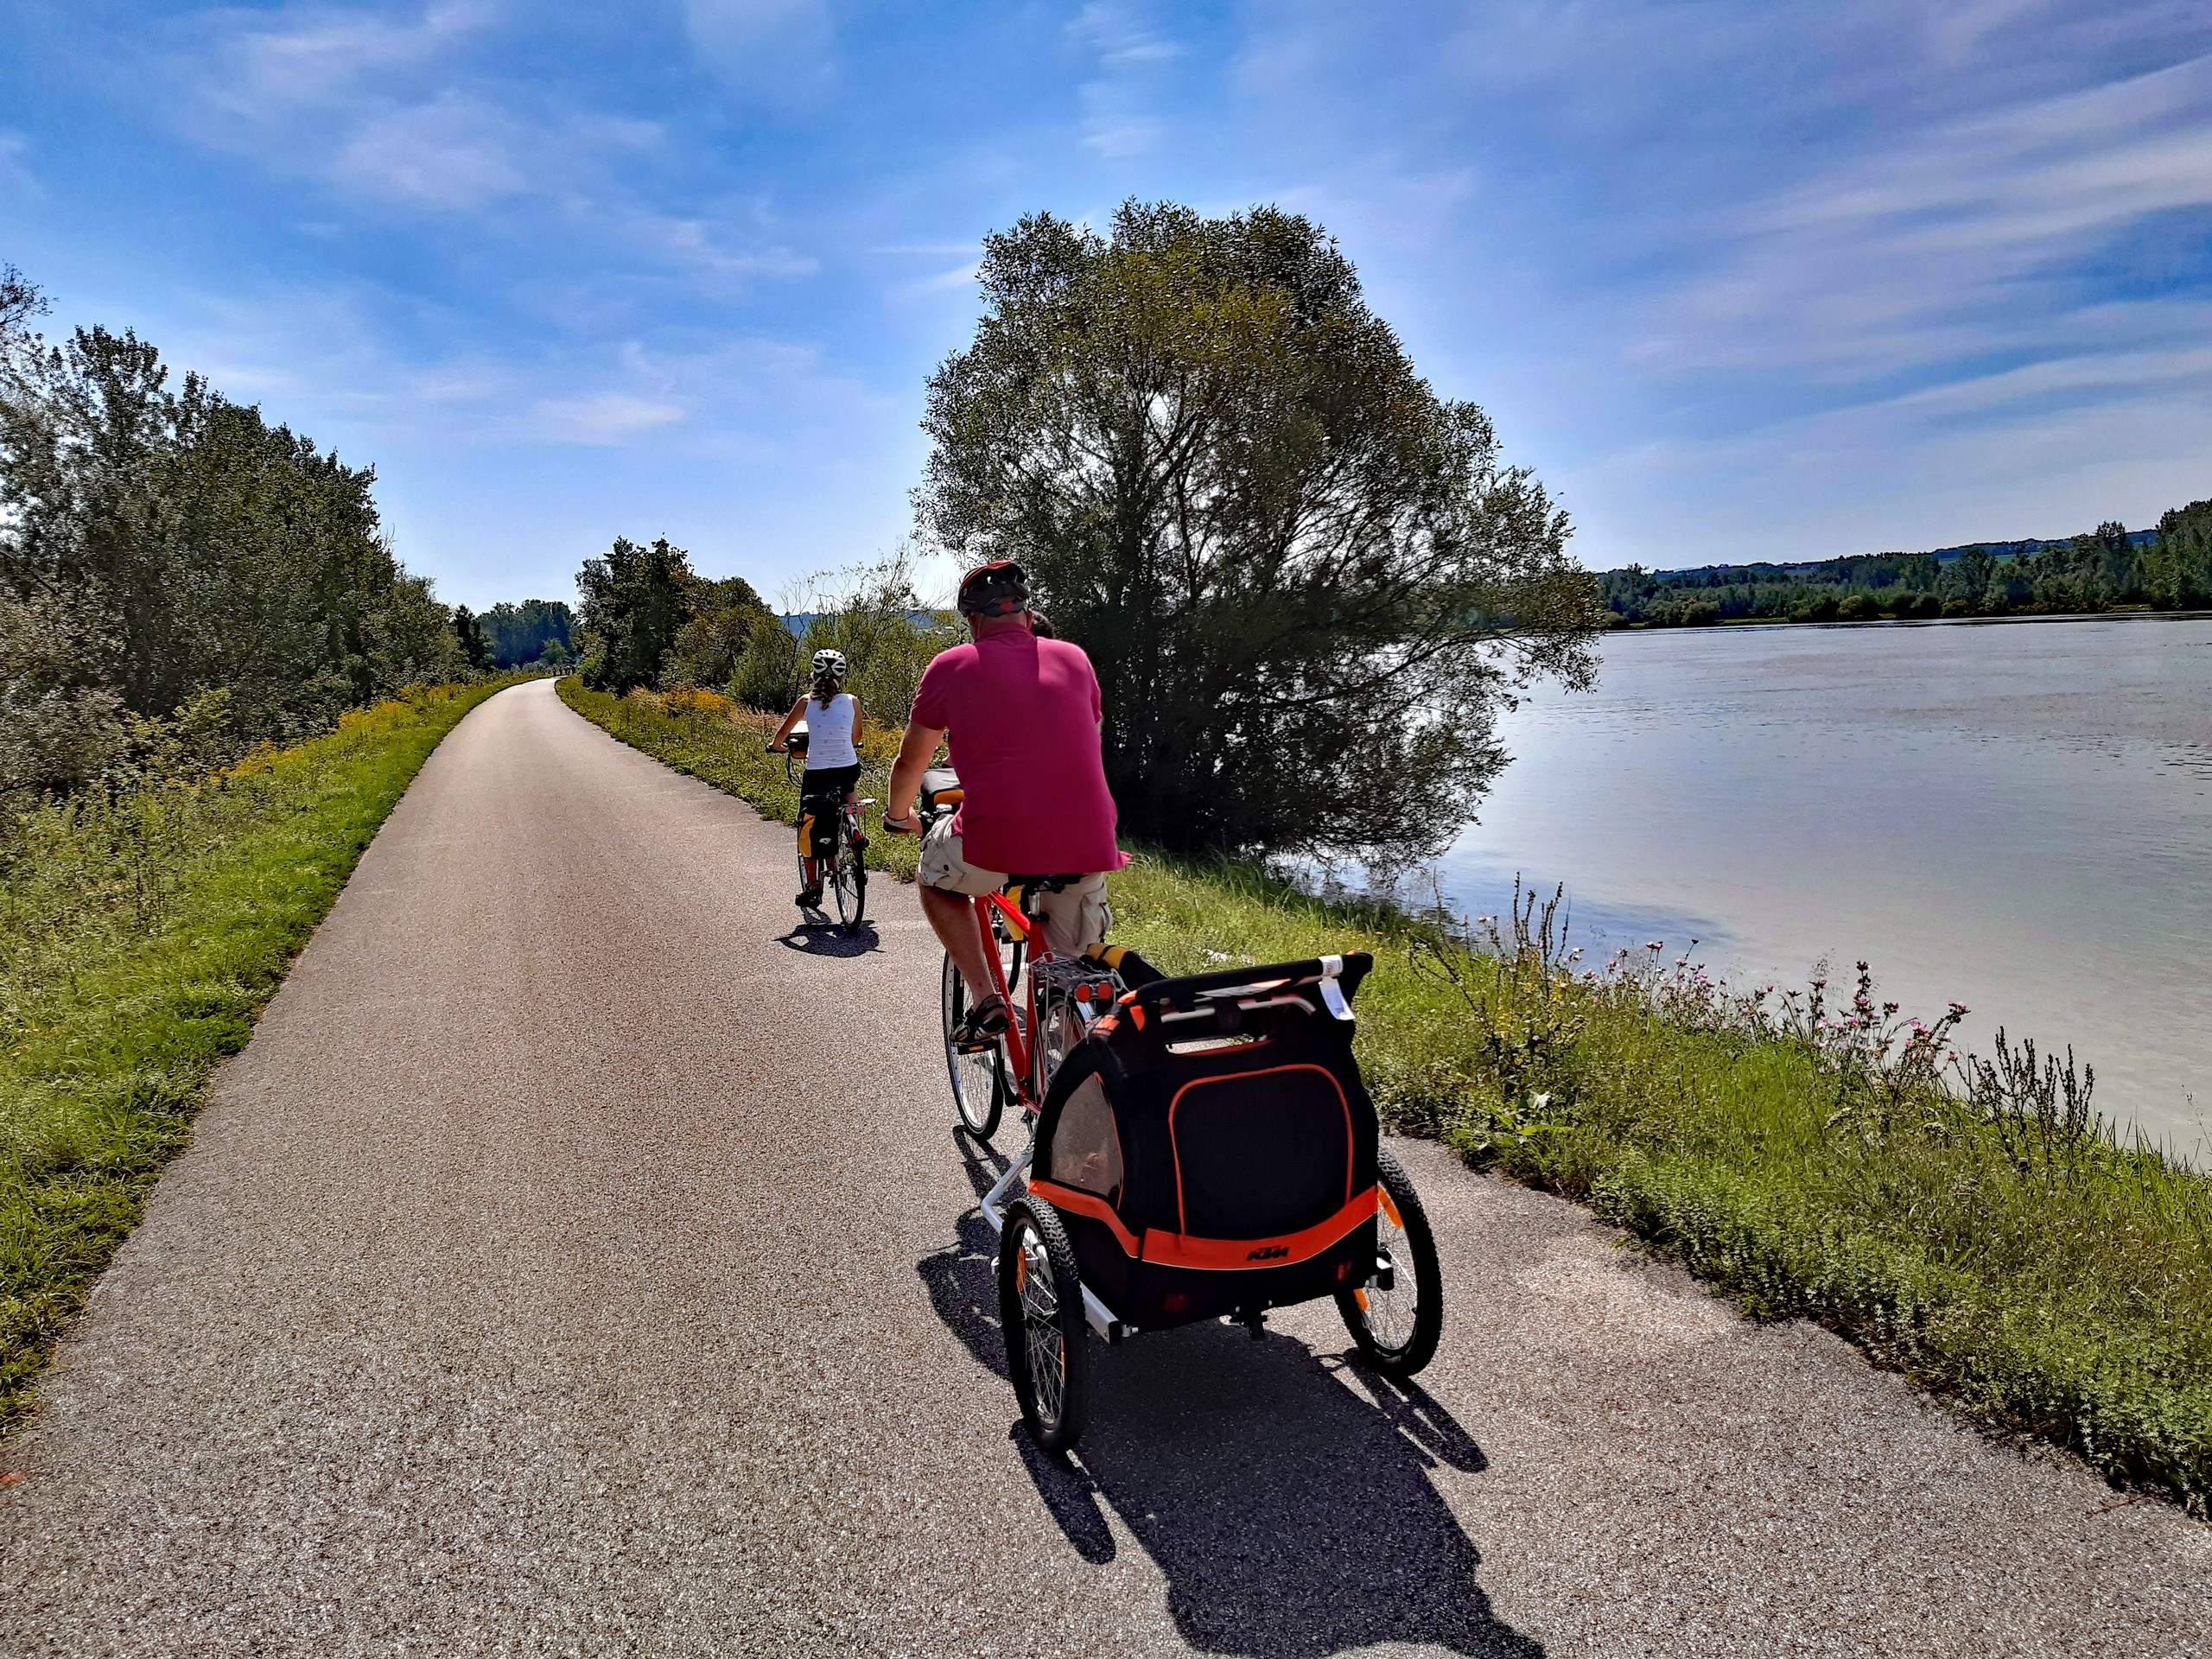 Family biking on a cycling path along the Danube river